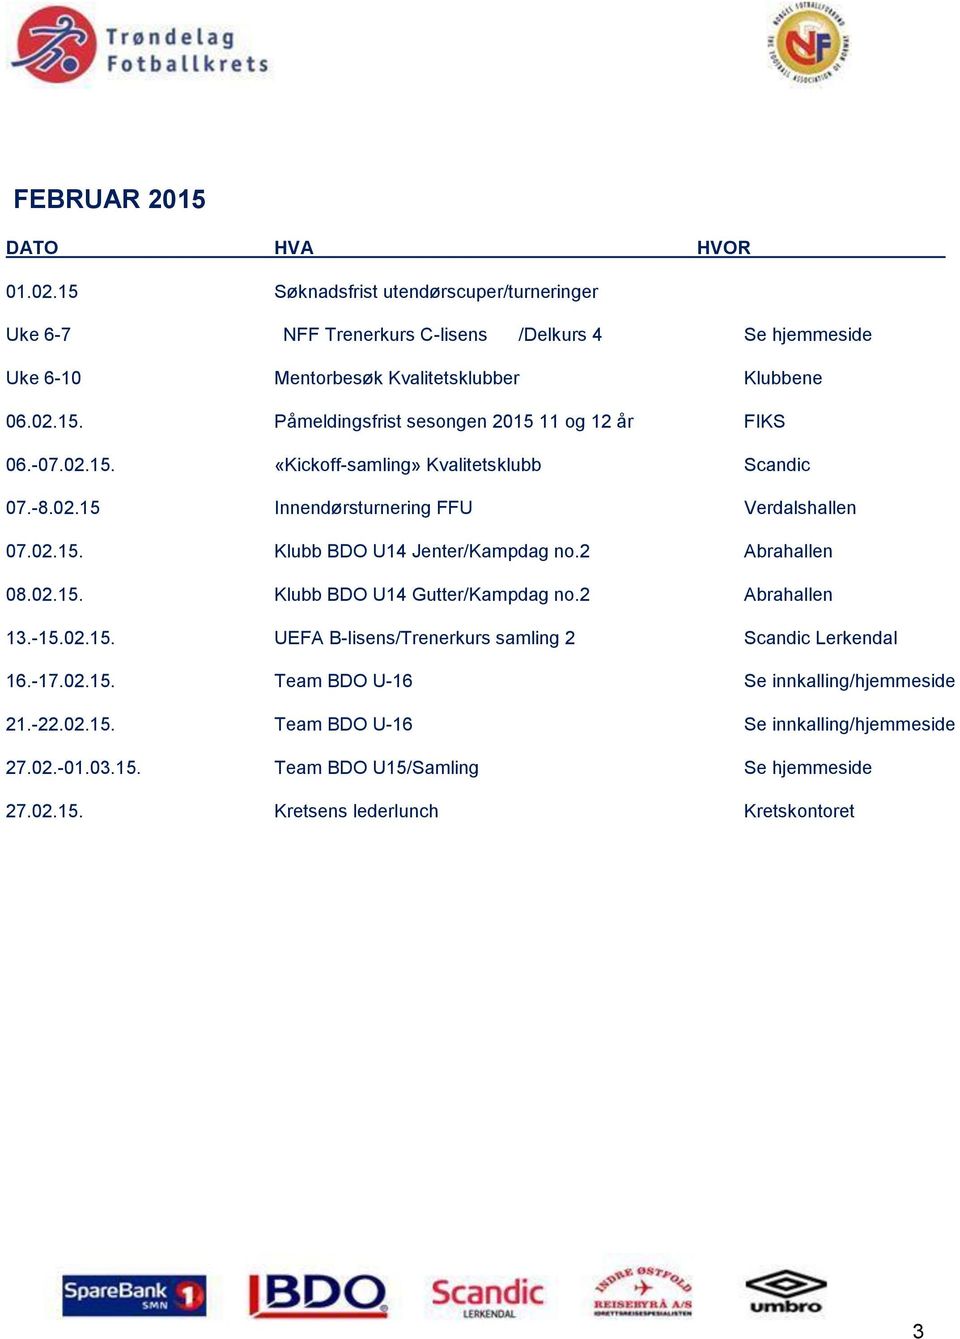 2 Abrahallen 13.-15.02.15. UEFA B-lisens/Trenerkurs samling 2 Scandic Lerkendal 16.-17.02.15. Team BDO U-16 Se innkalling/hjemmeside 21.-22.02.15. Team BDO U-16 Se innkalling/hjemmeside 27.